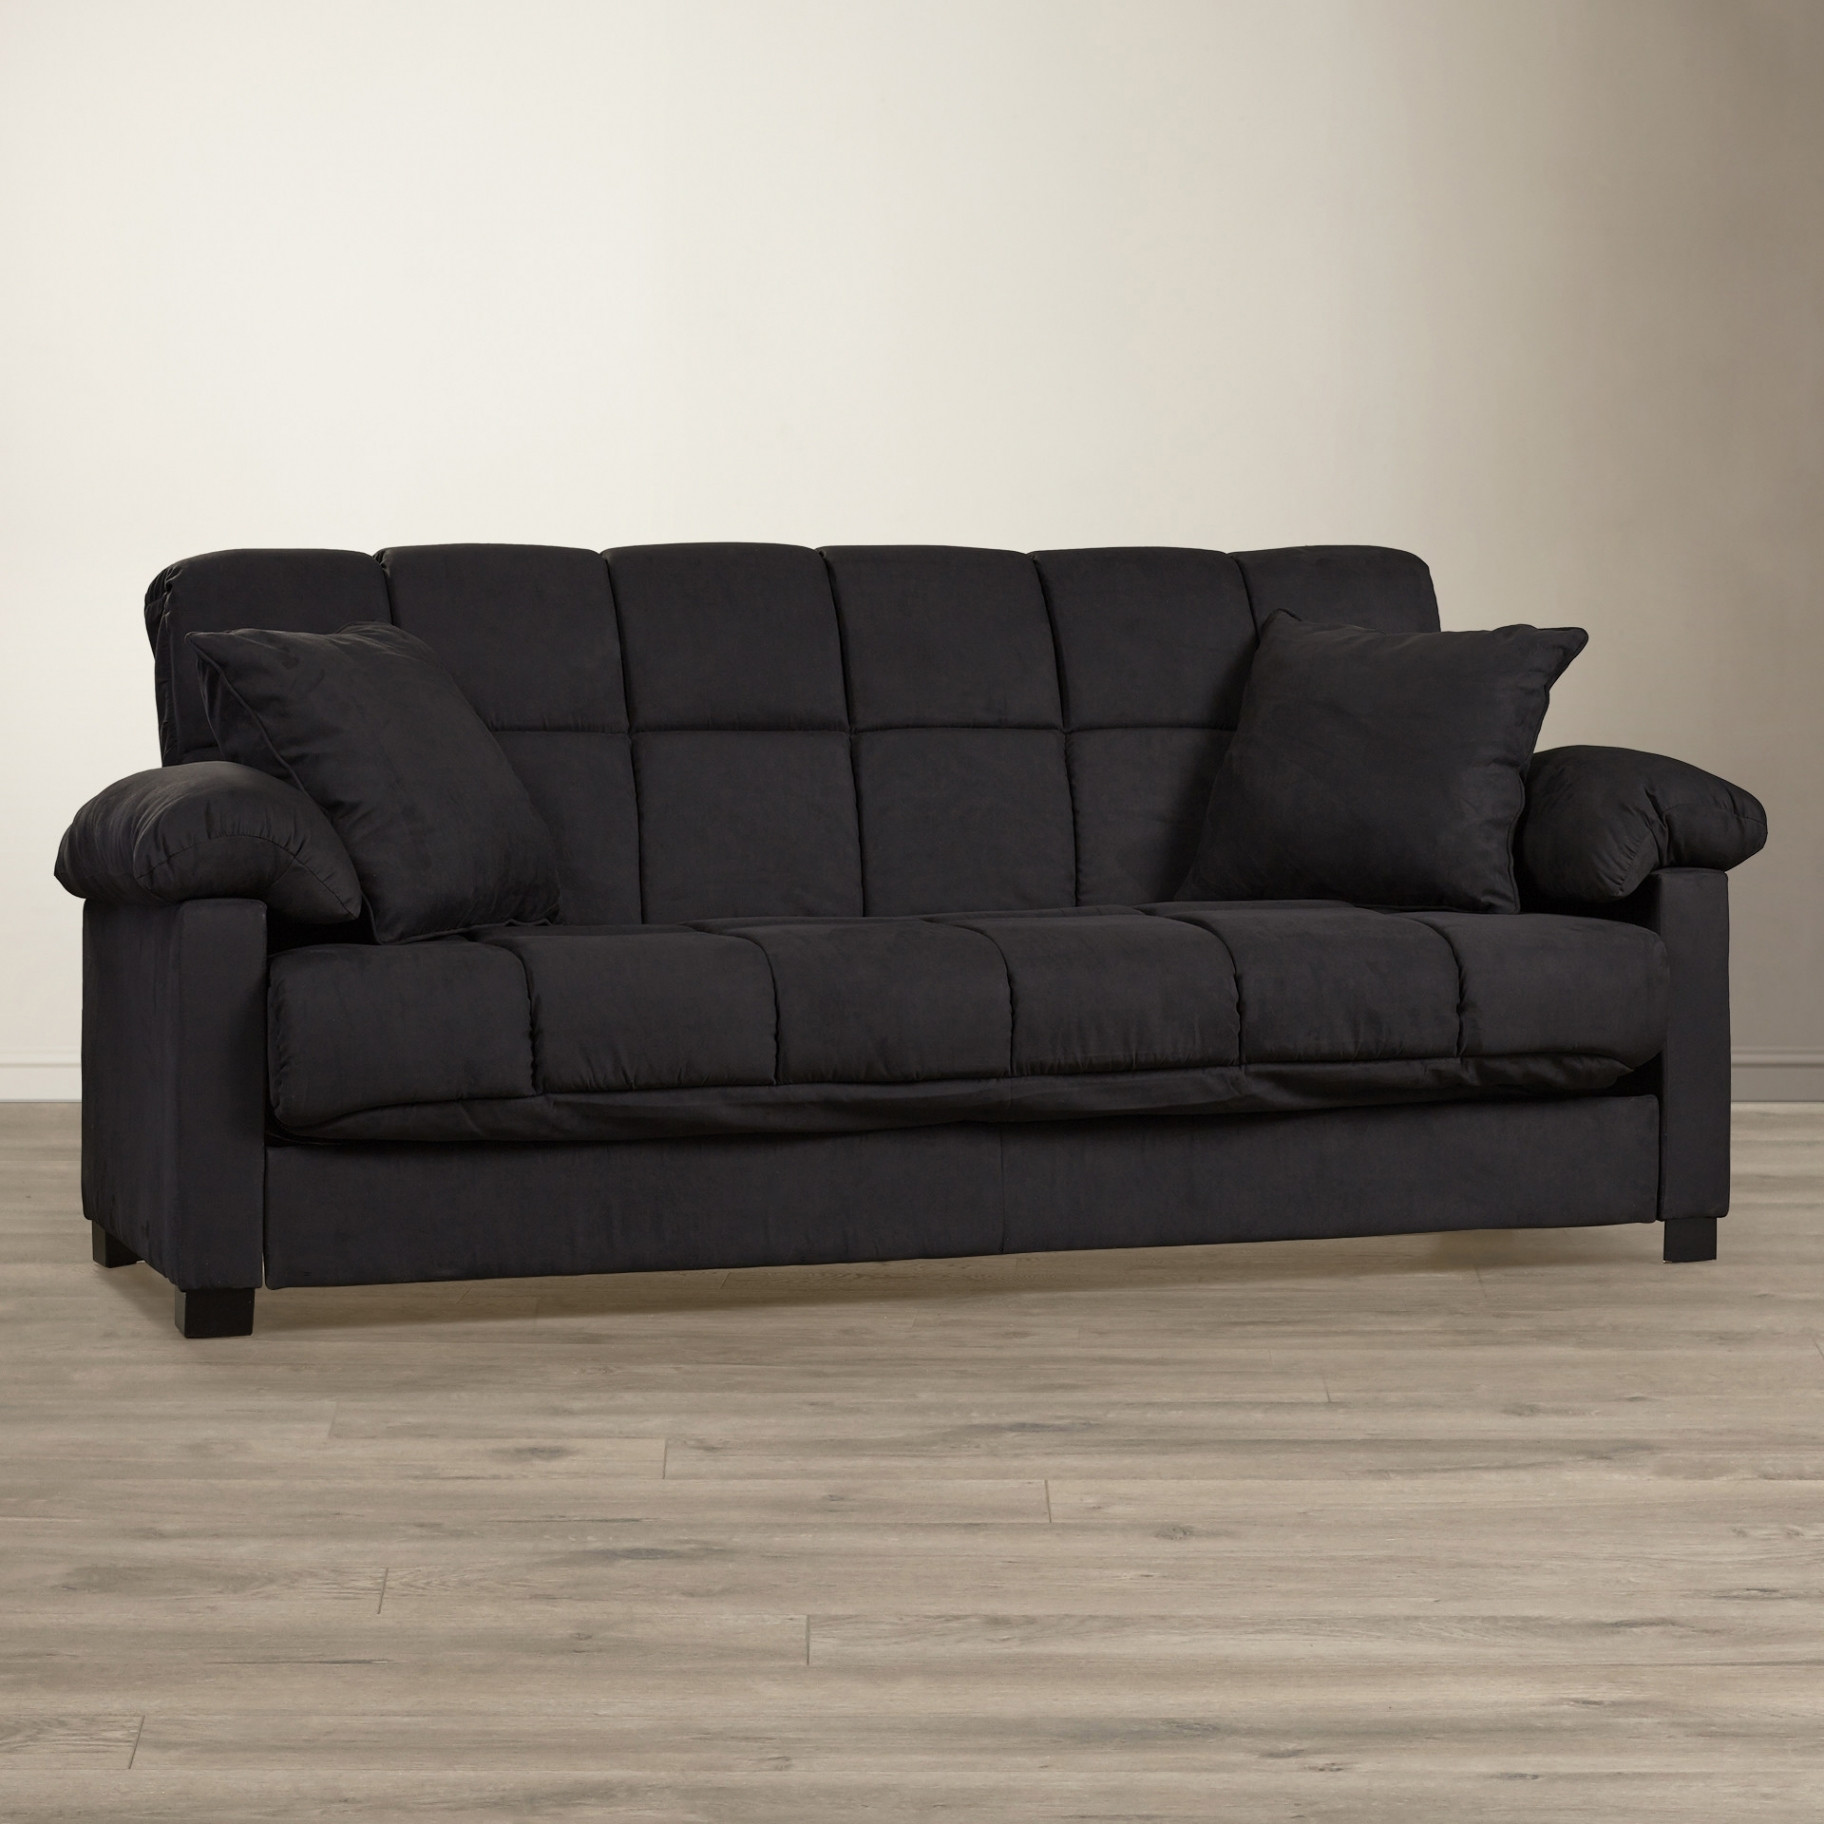 Best ideas about Tempur Pedic Sleeper Sofa
. Save or Pin Furniture fy Design Tempurpedic Sleeper Sofa For Now.